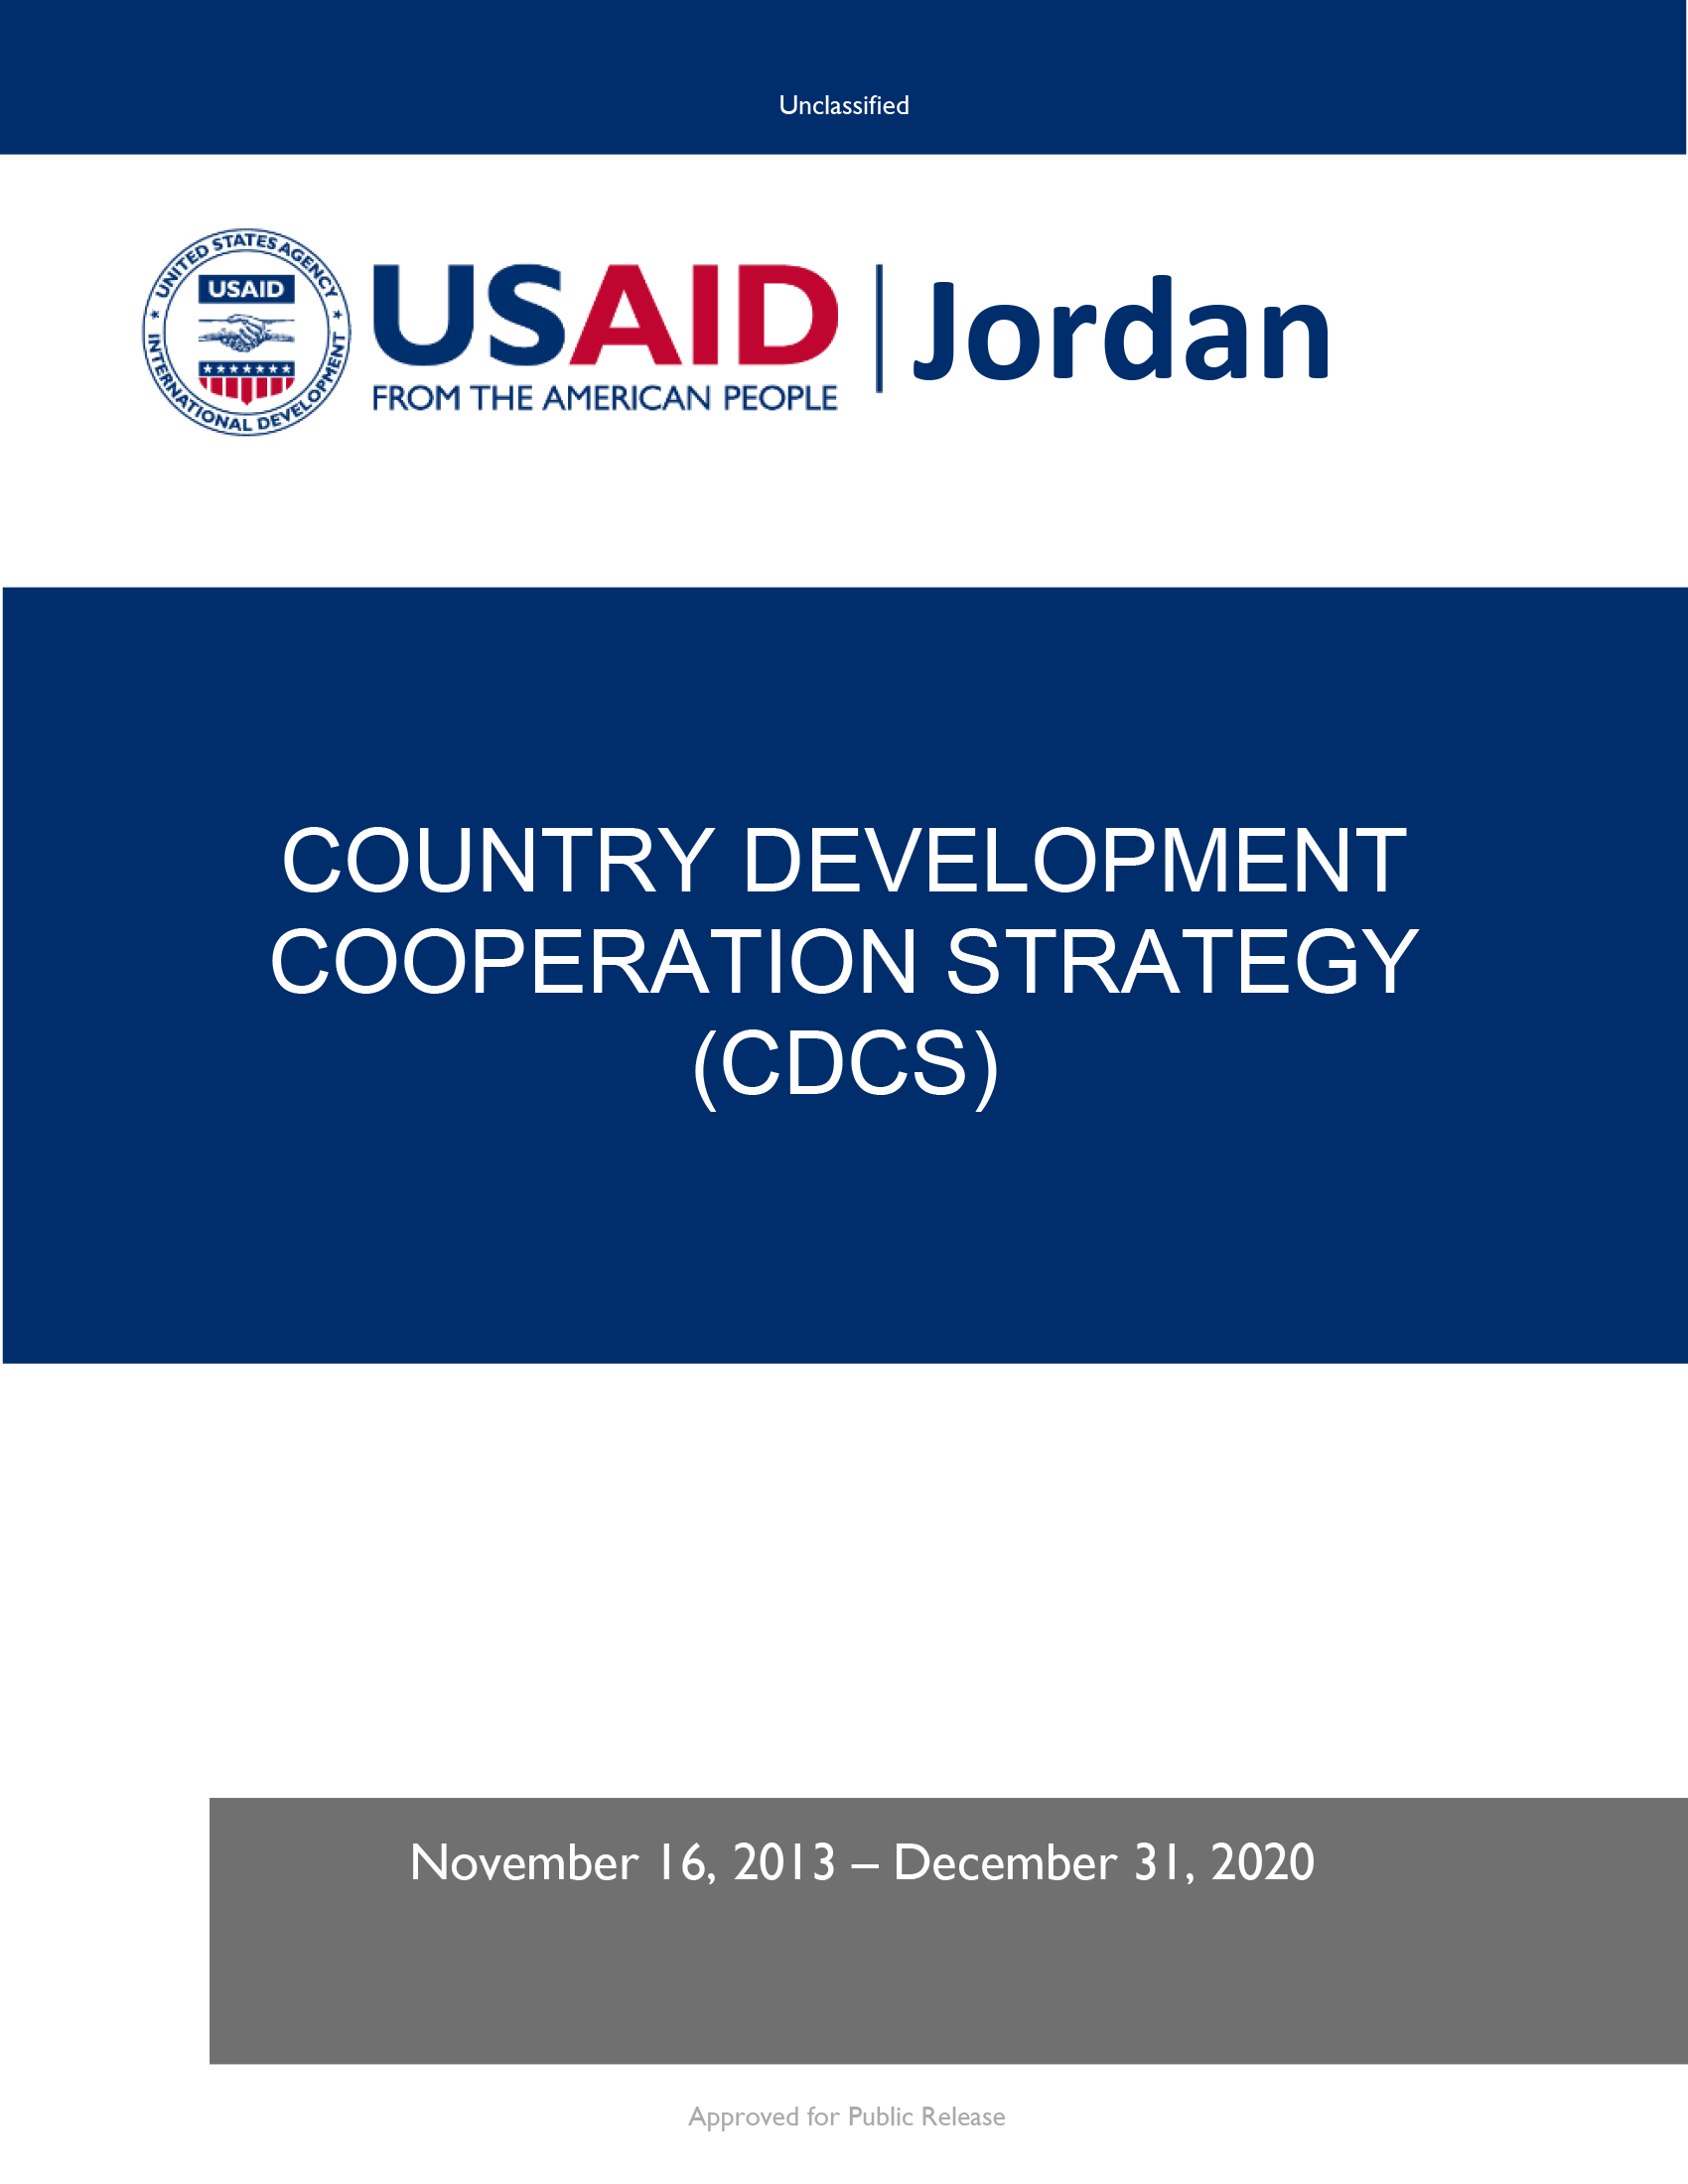 Jordan Country Development Cooperation Strategy 2013-2020